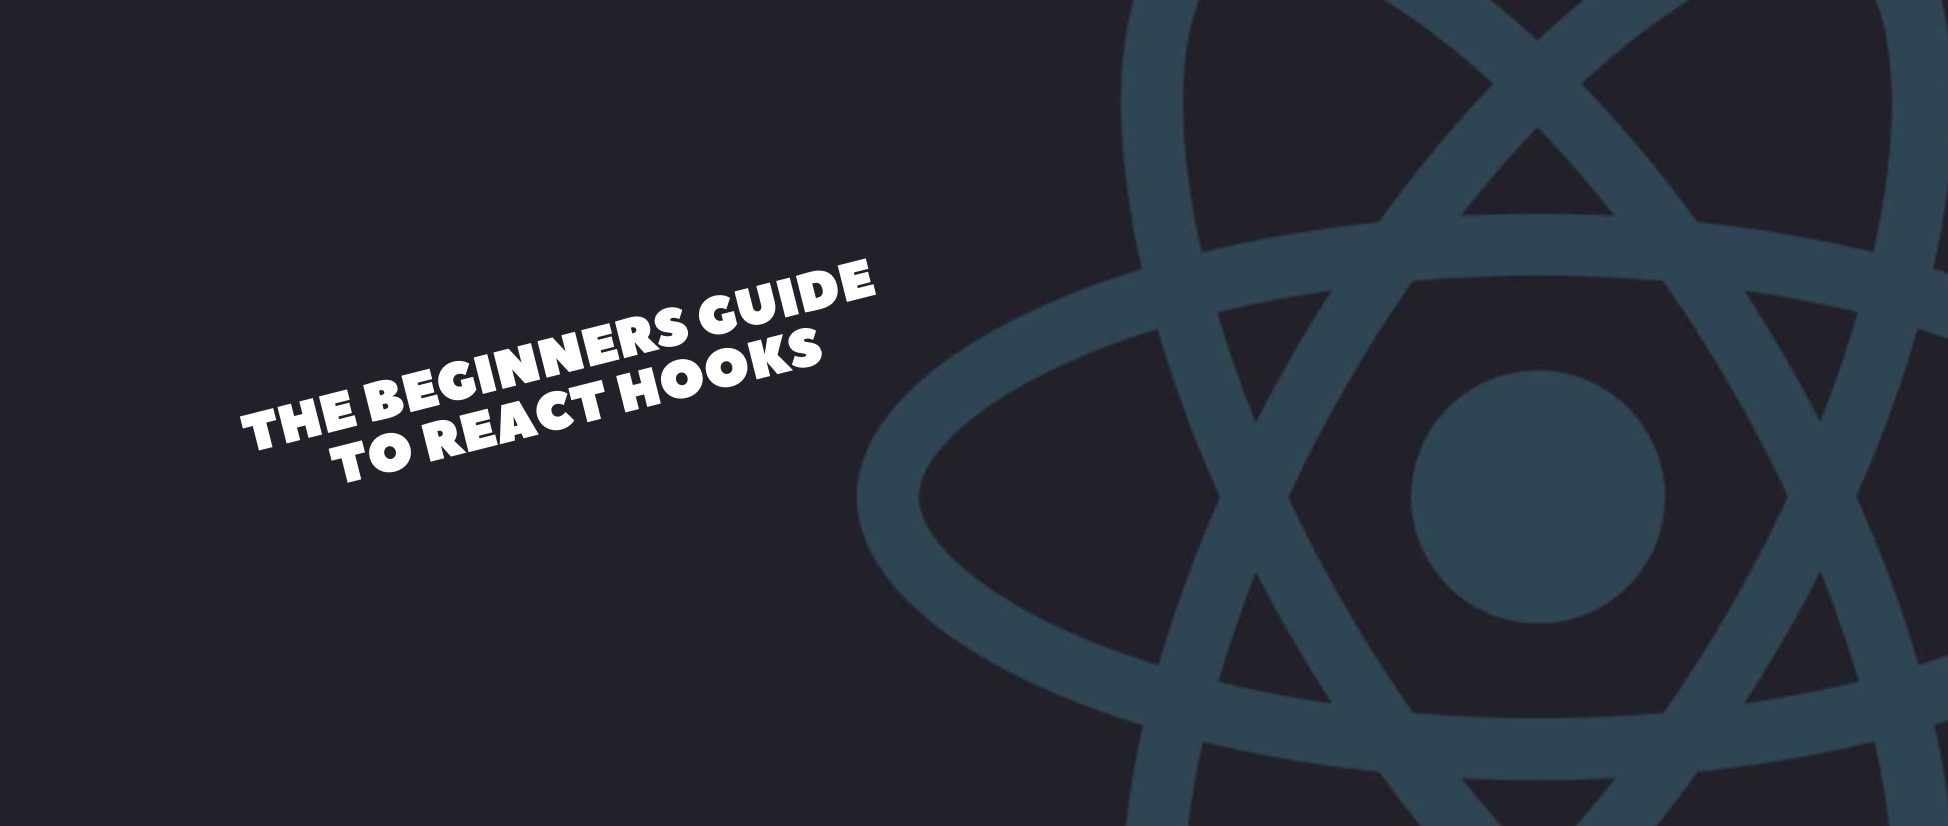 The Beginner's Guide to React Hooks